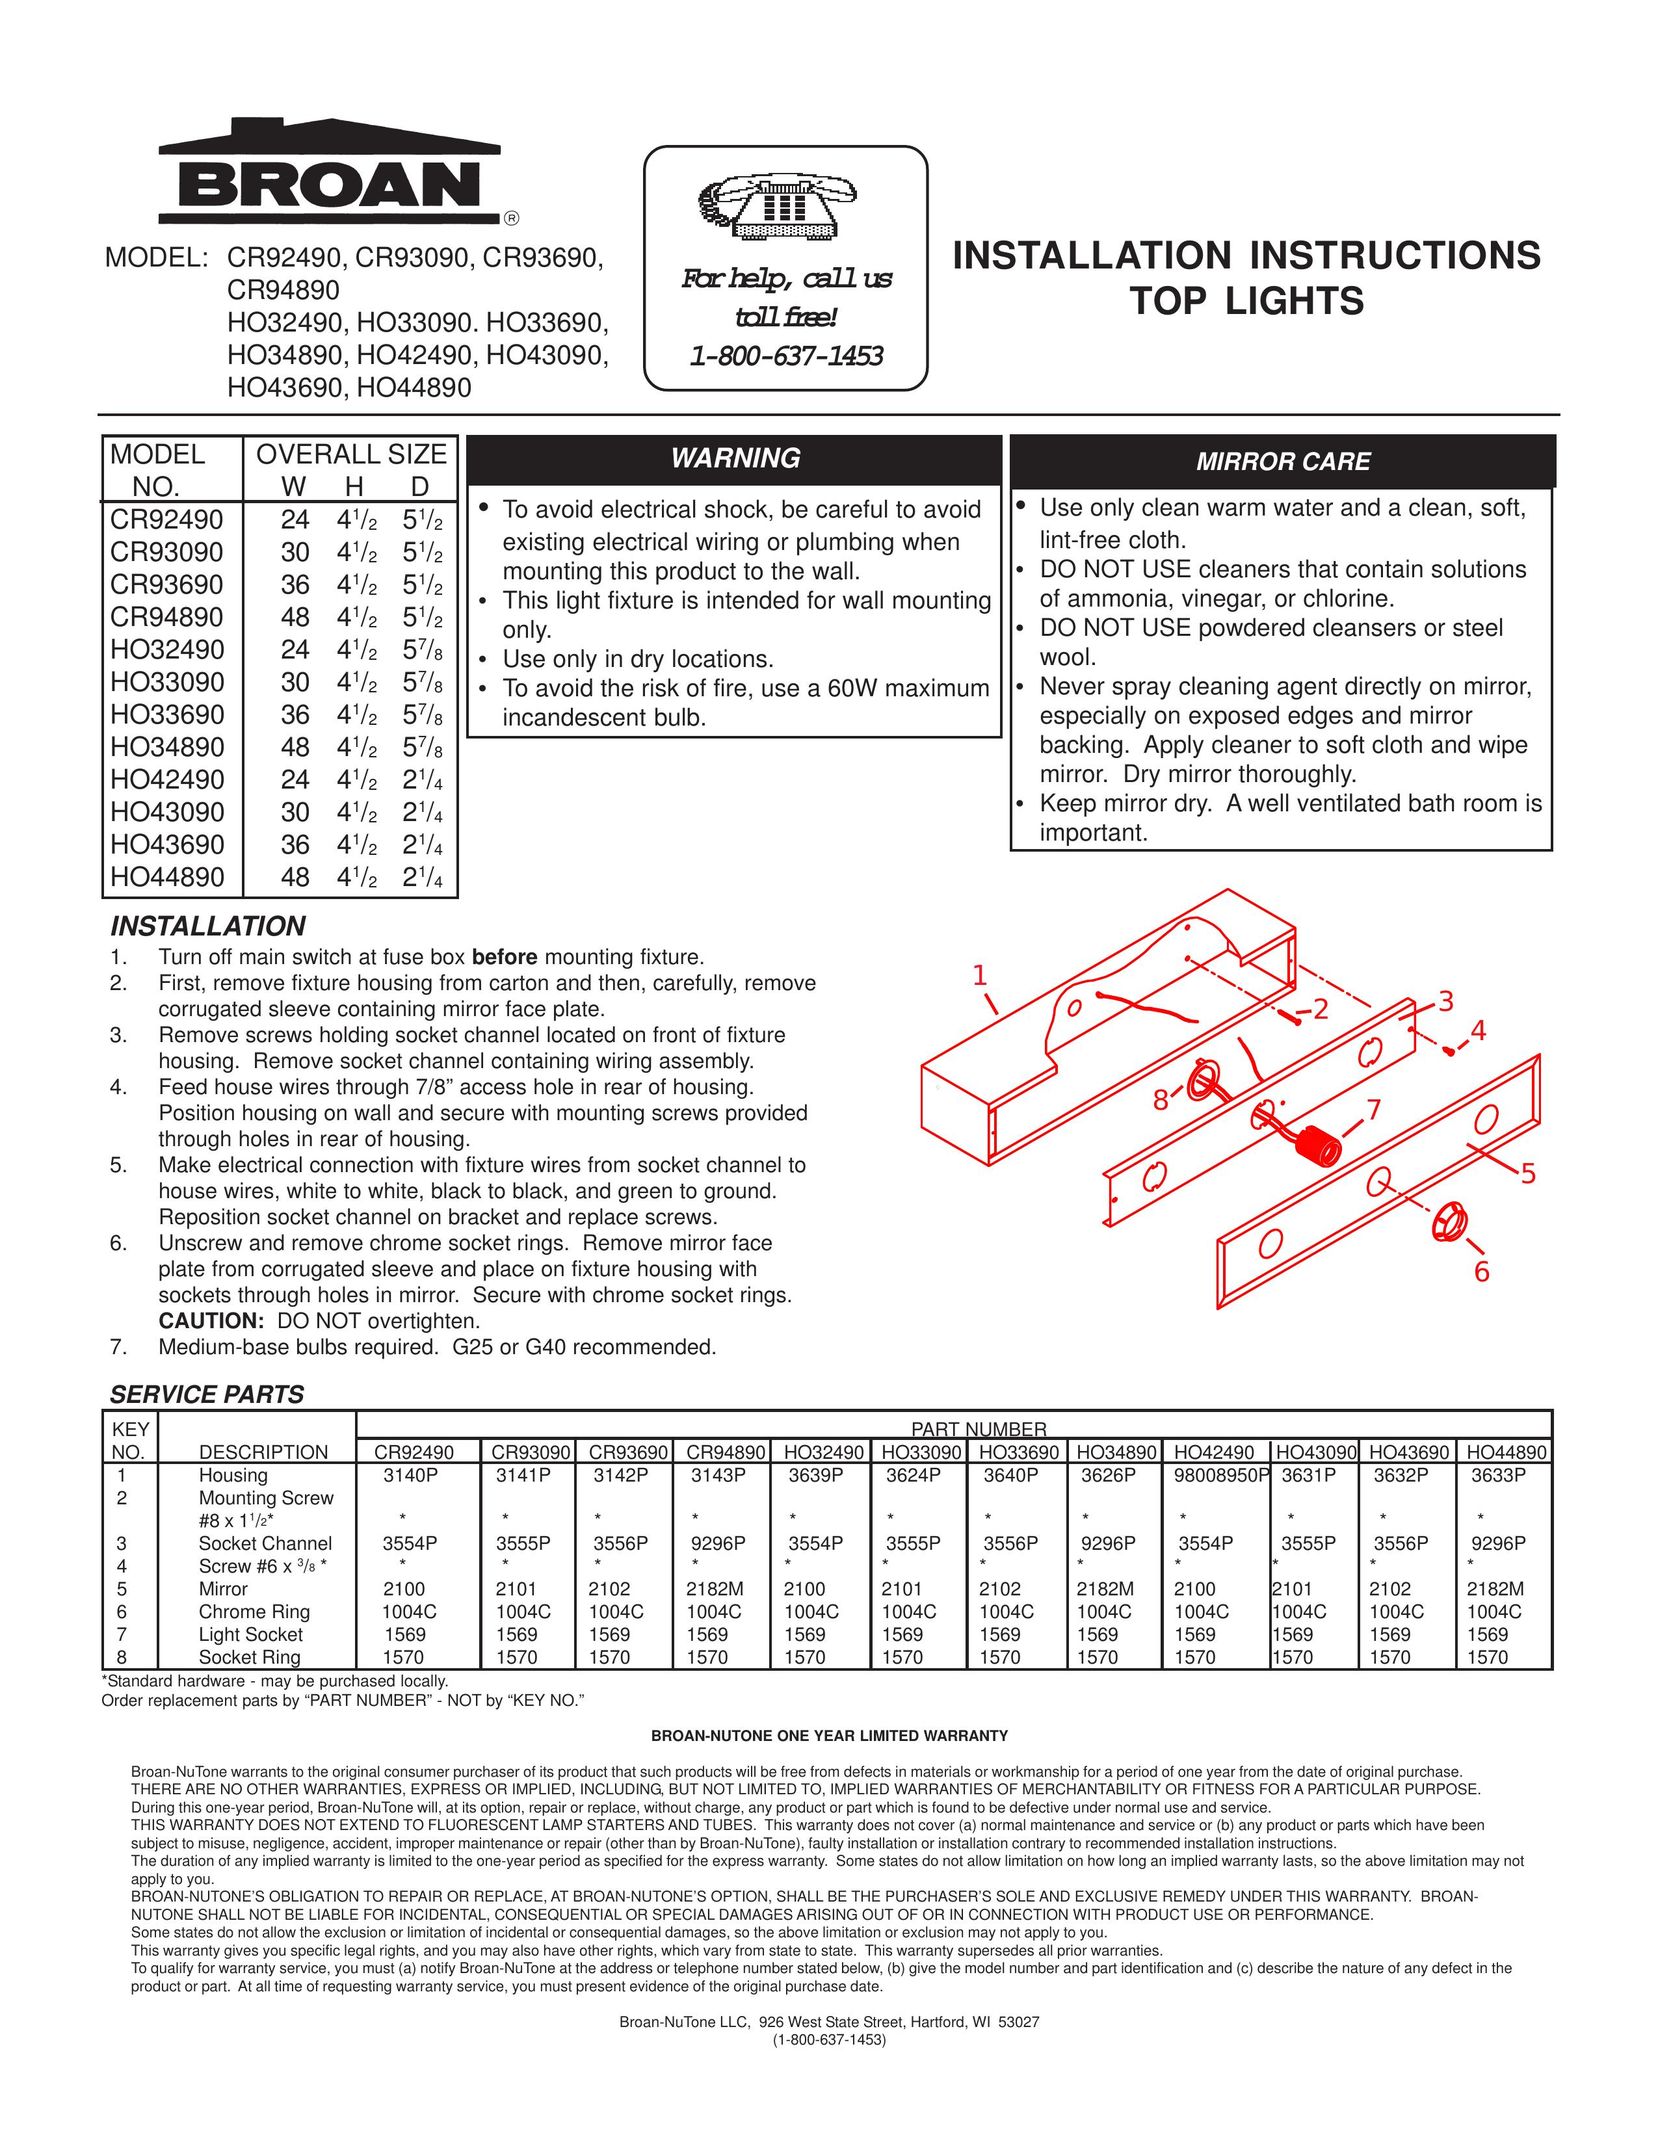 Broan CR92490 Indoor Furnishings User Manual